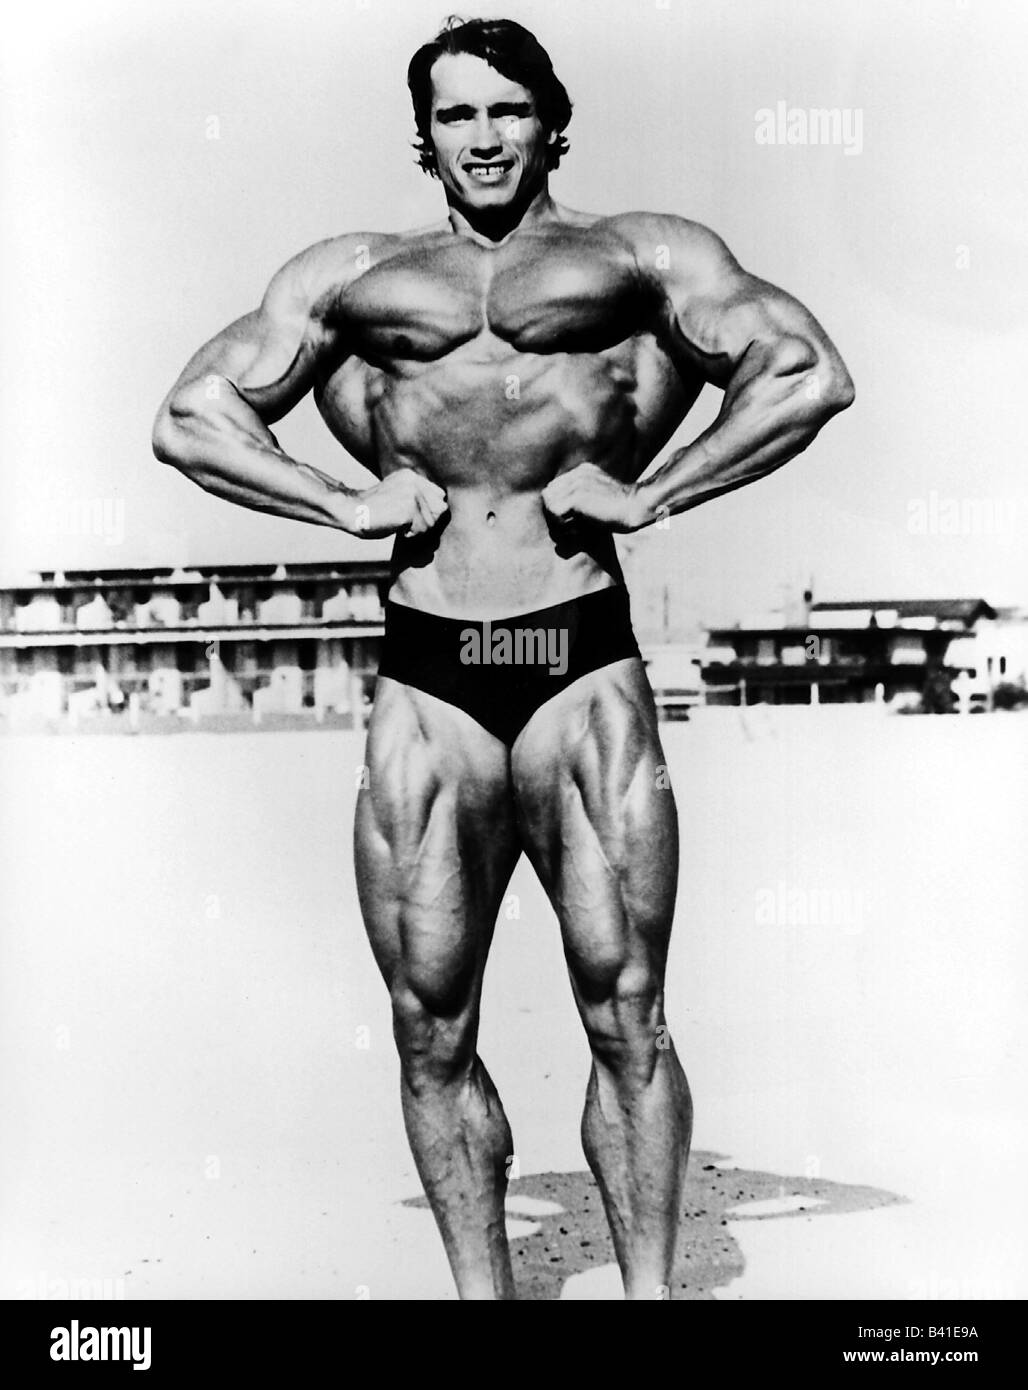 What is a photo of Arnold Schwarzeneggers signature bodybuilding pose   Quora